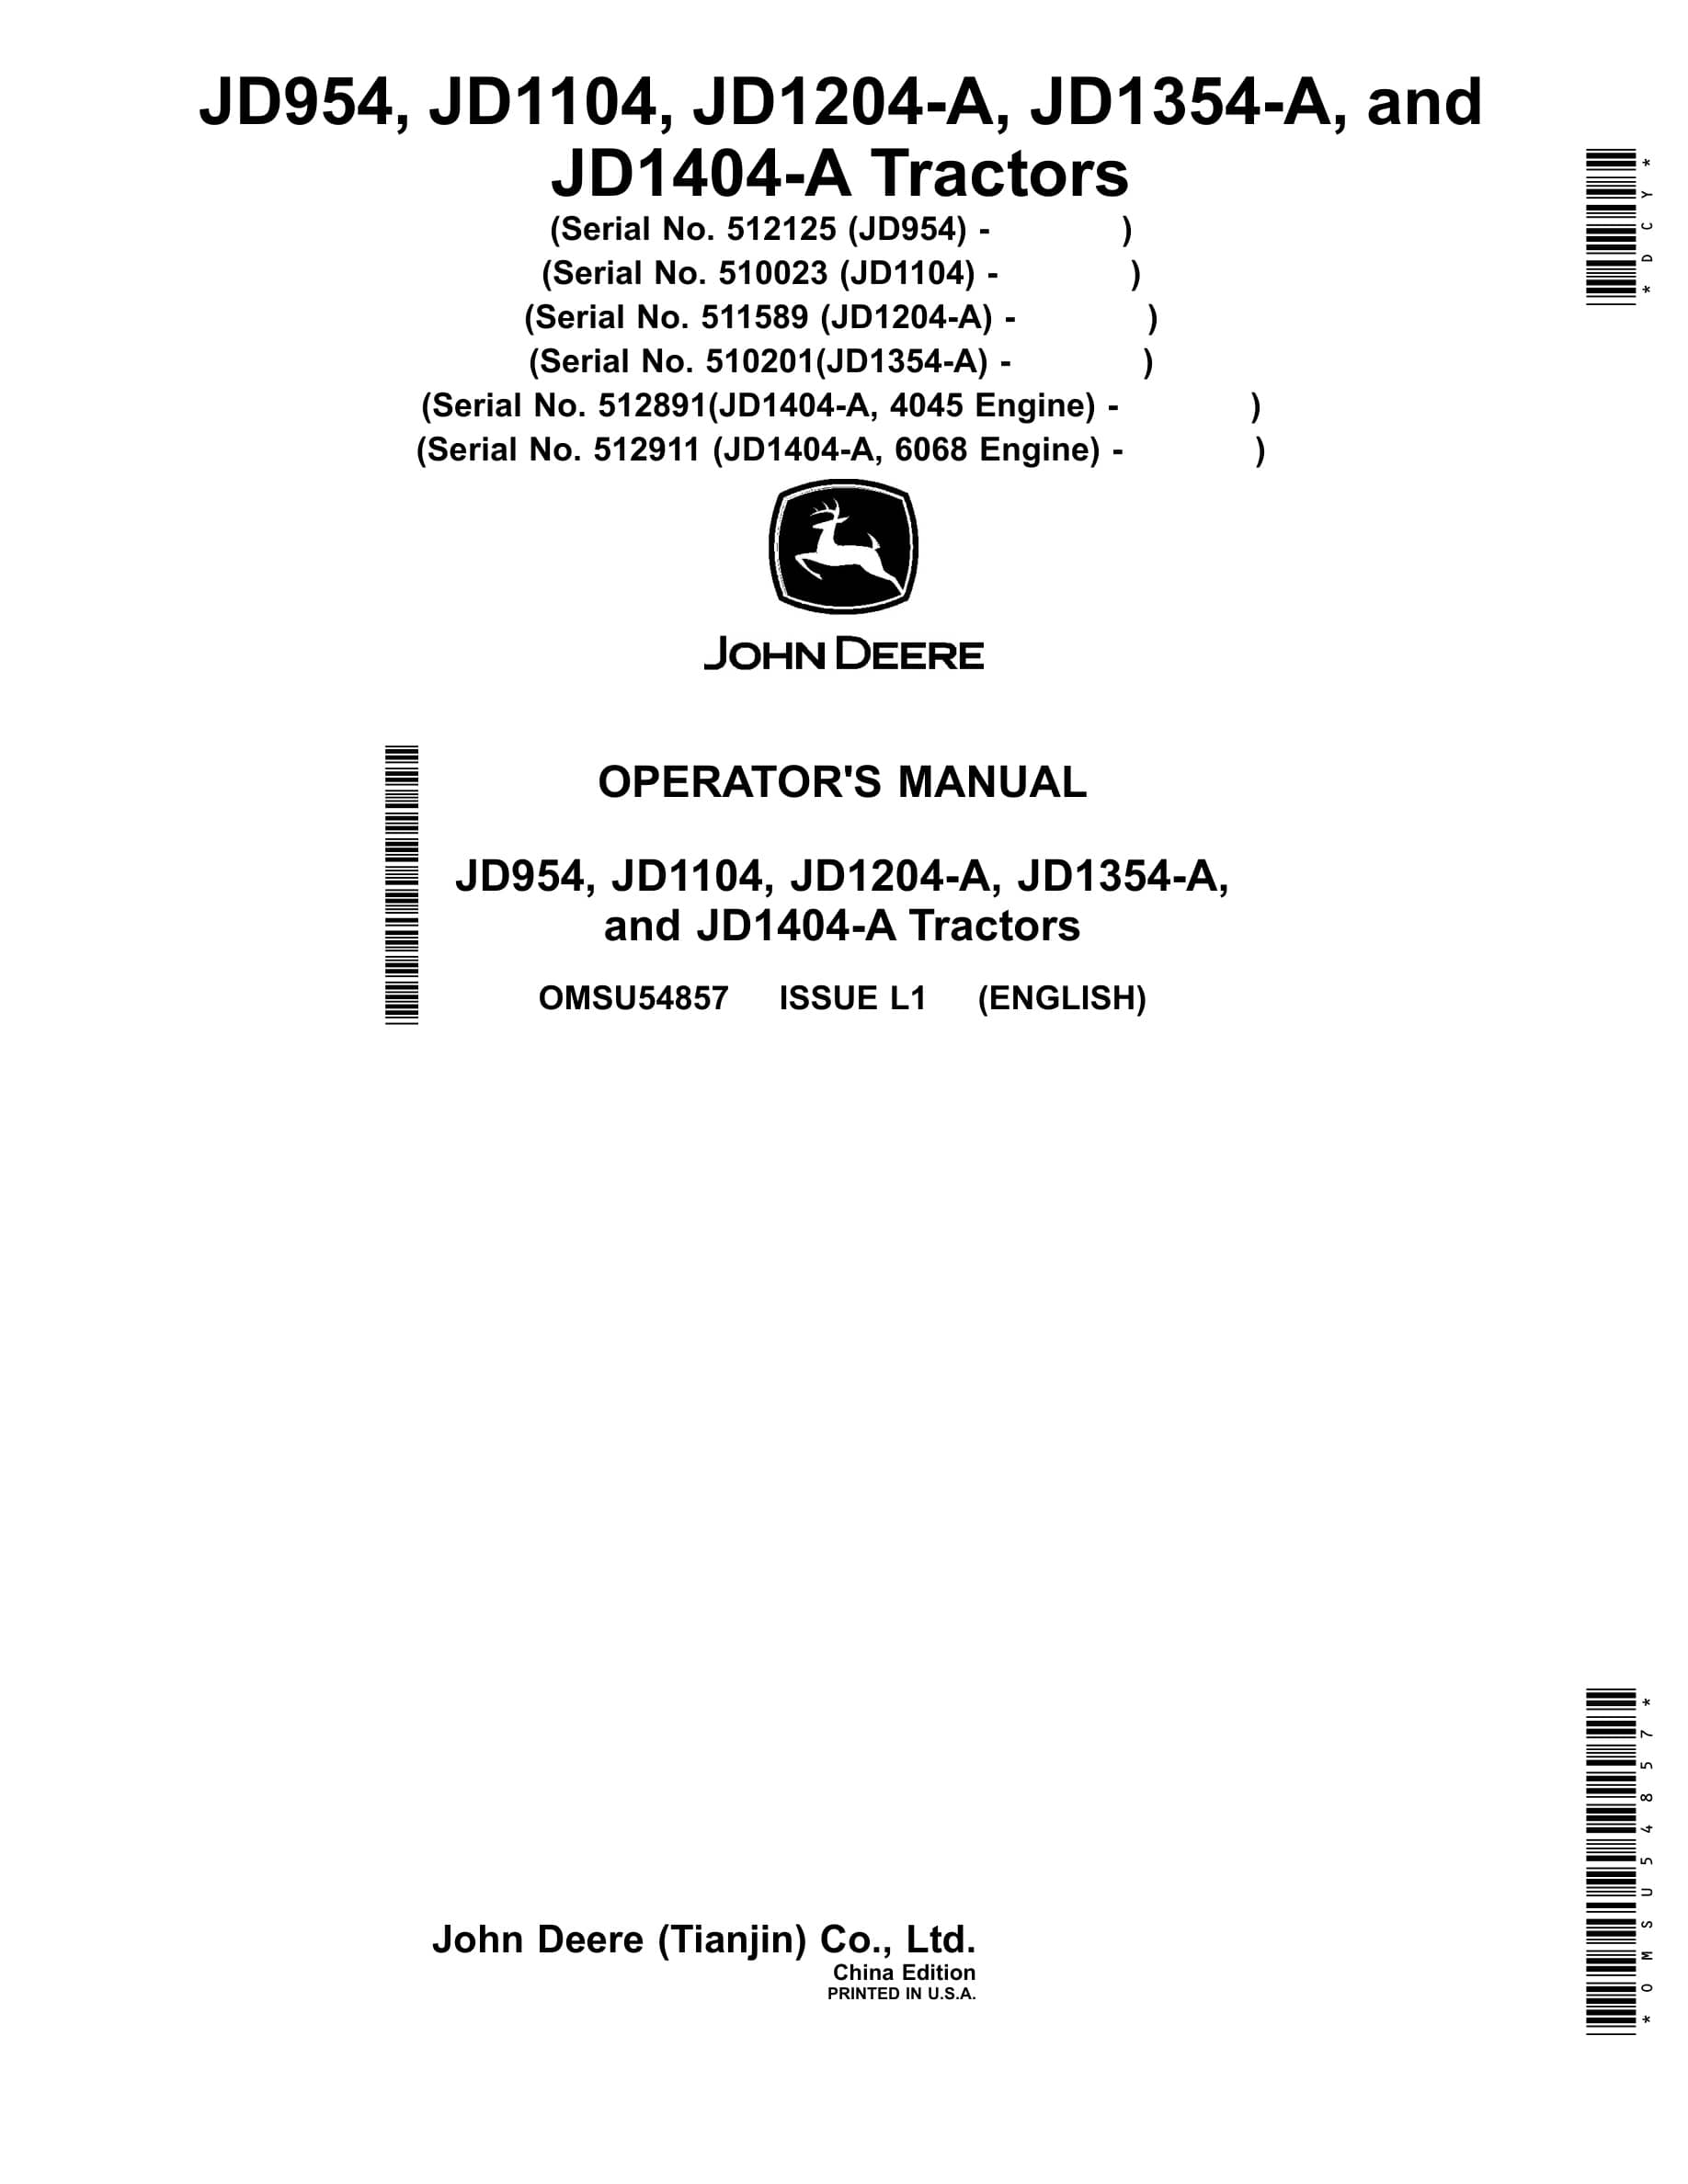 John Deere Jd954, Jd1104, Jd1204-a, Jd1354-a, And Jd1404-a Tractors Operator Manuals OMSU54857-1